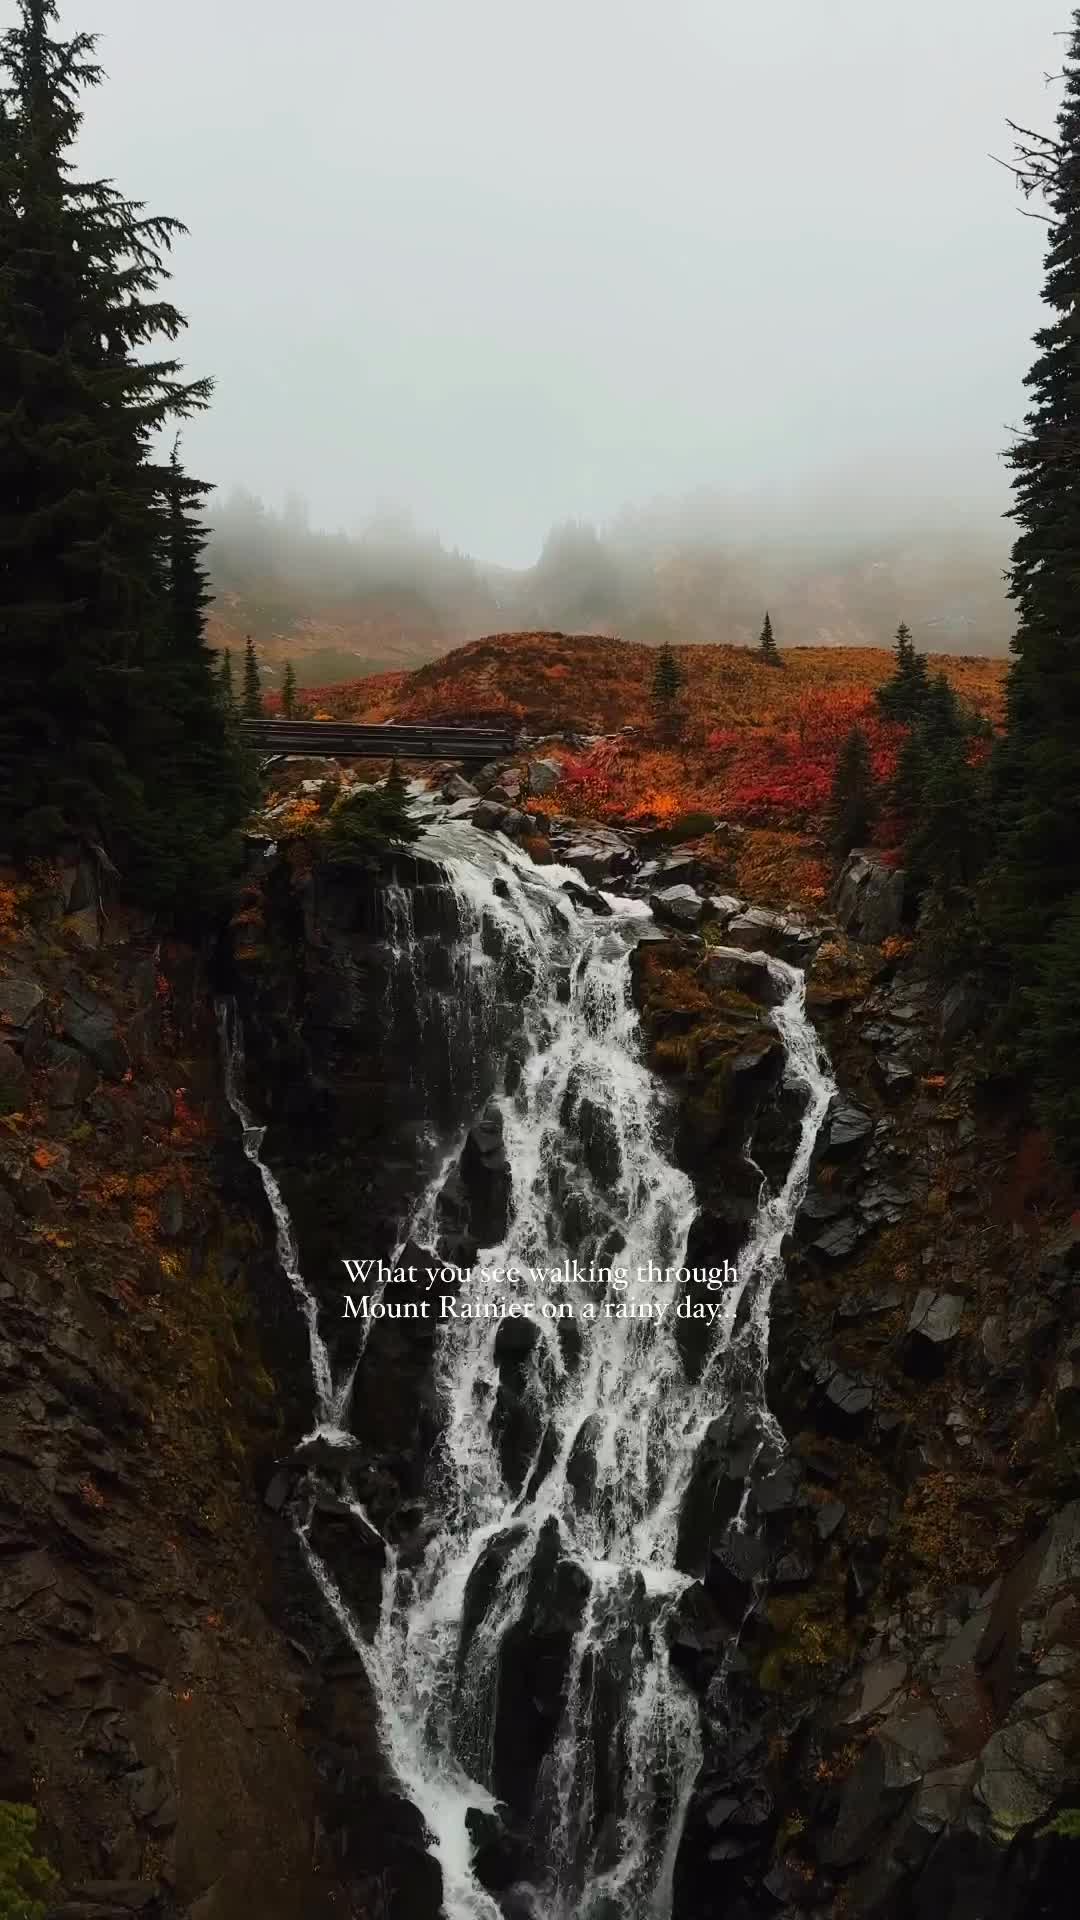 Autumn Bliss at Mount Rainier: Nature's Solo Show